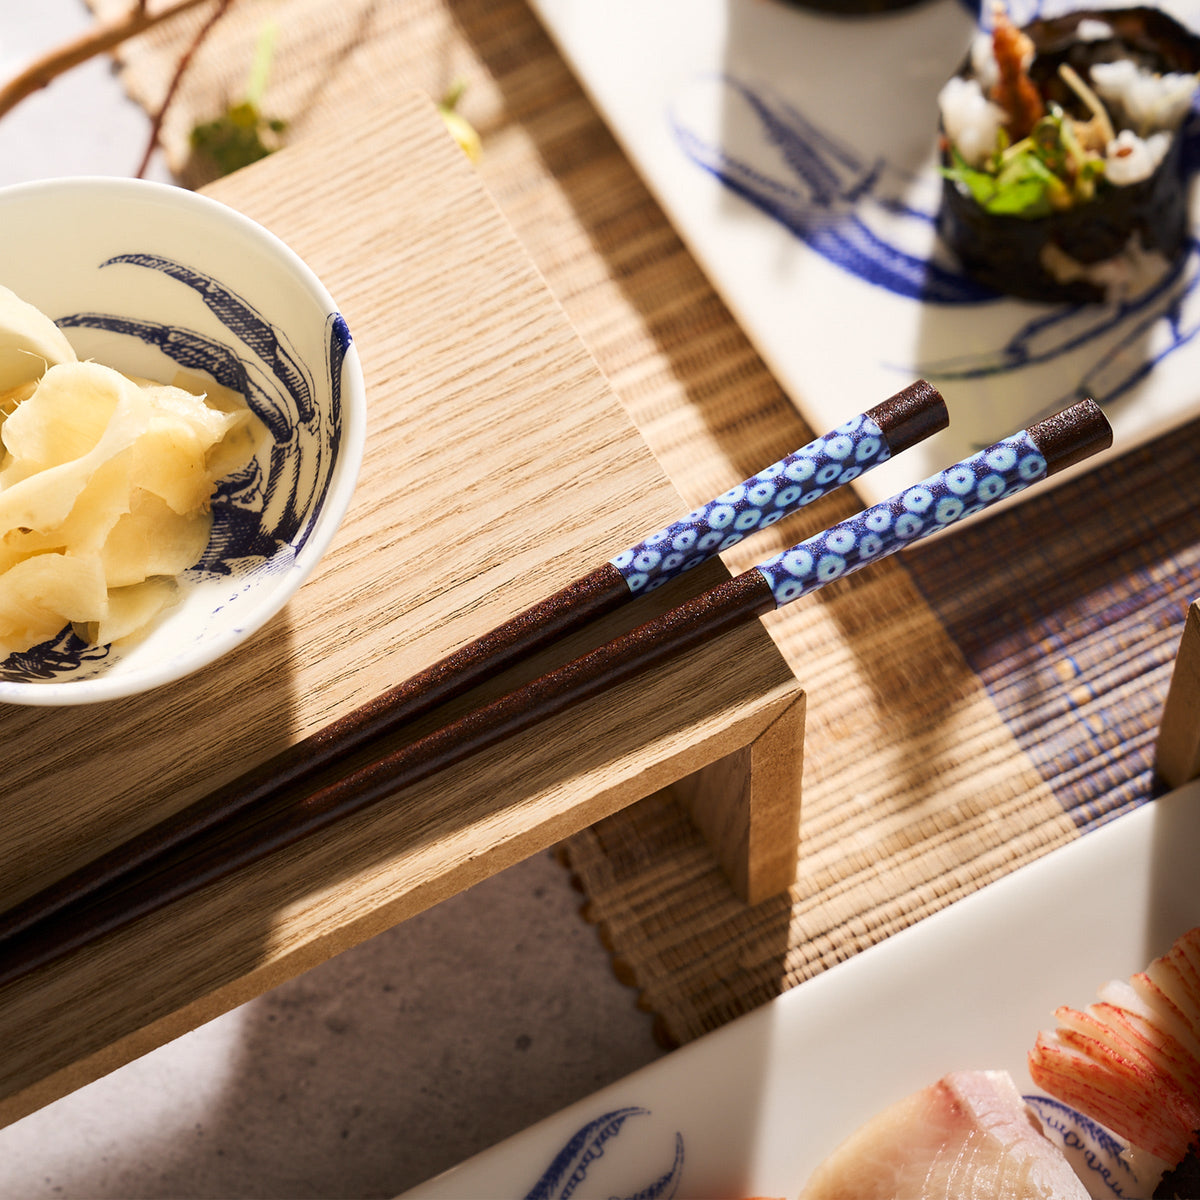 Japanese sushi and Yokohama Chopsticks on a wooden table in Japan by Miya, Inc.